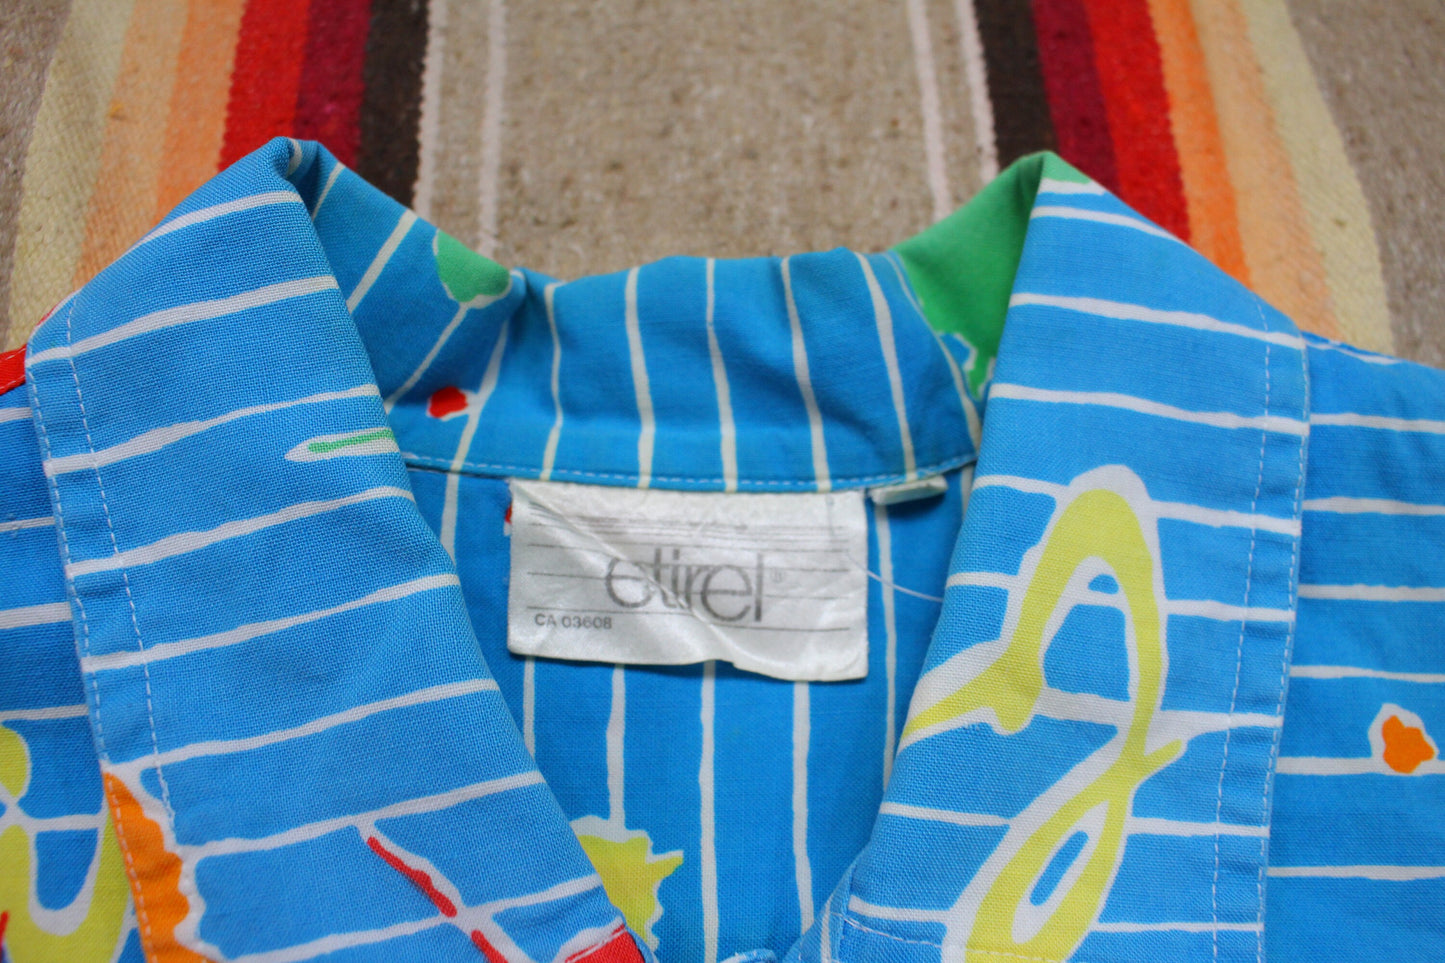 1990s Etirel Shortsleeve Striped "Rainbow" Shirt Size M/L